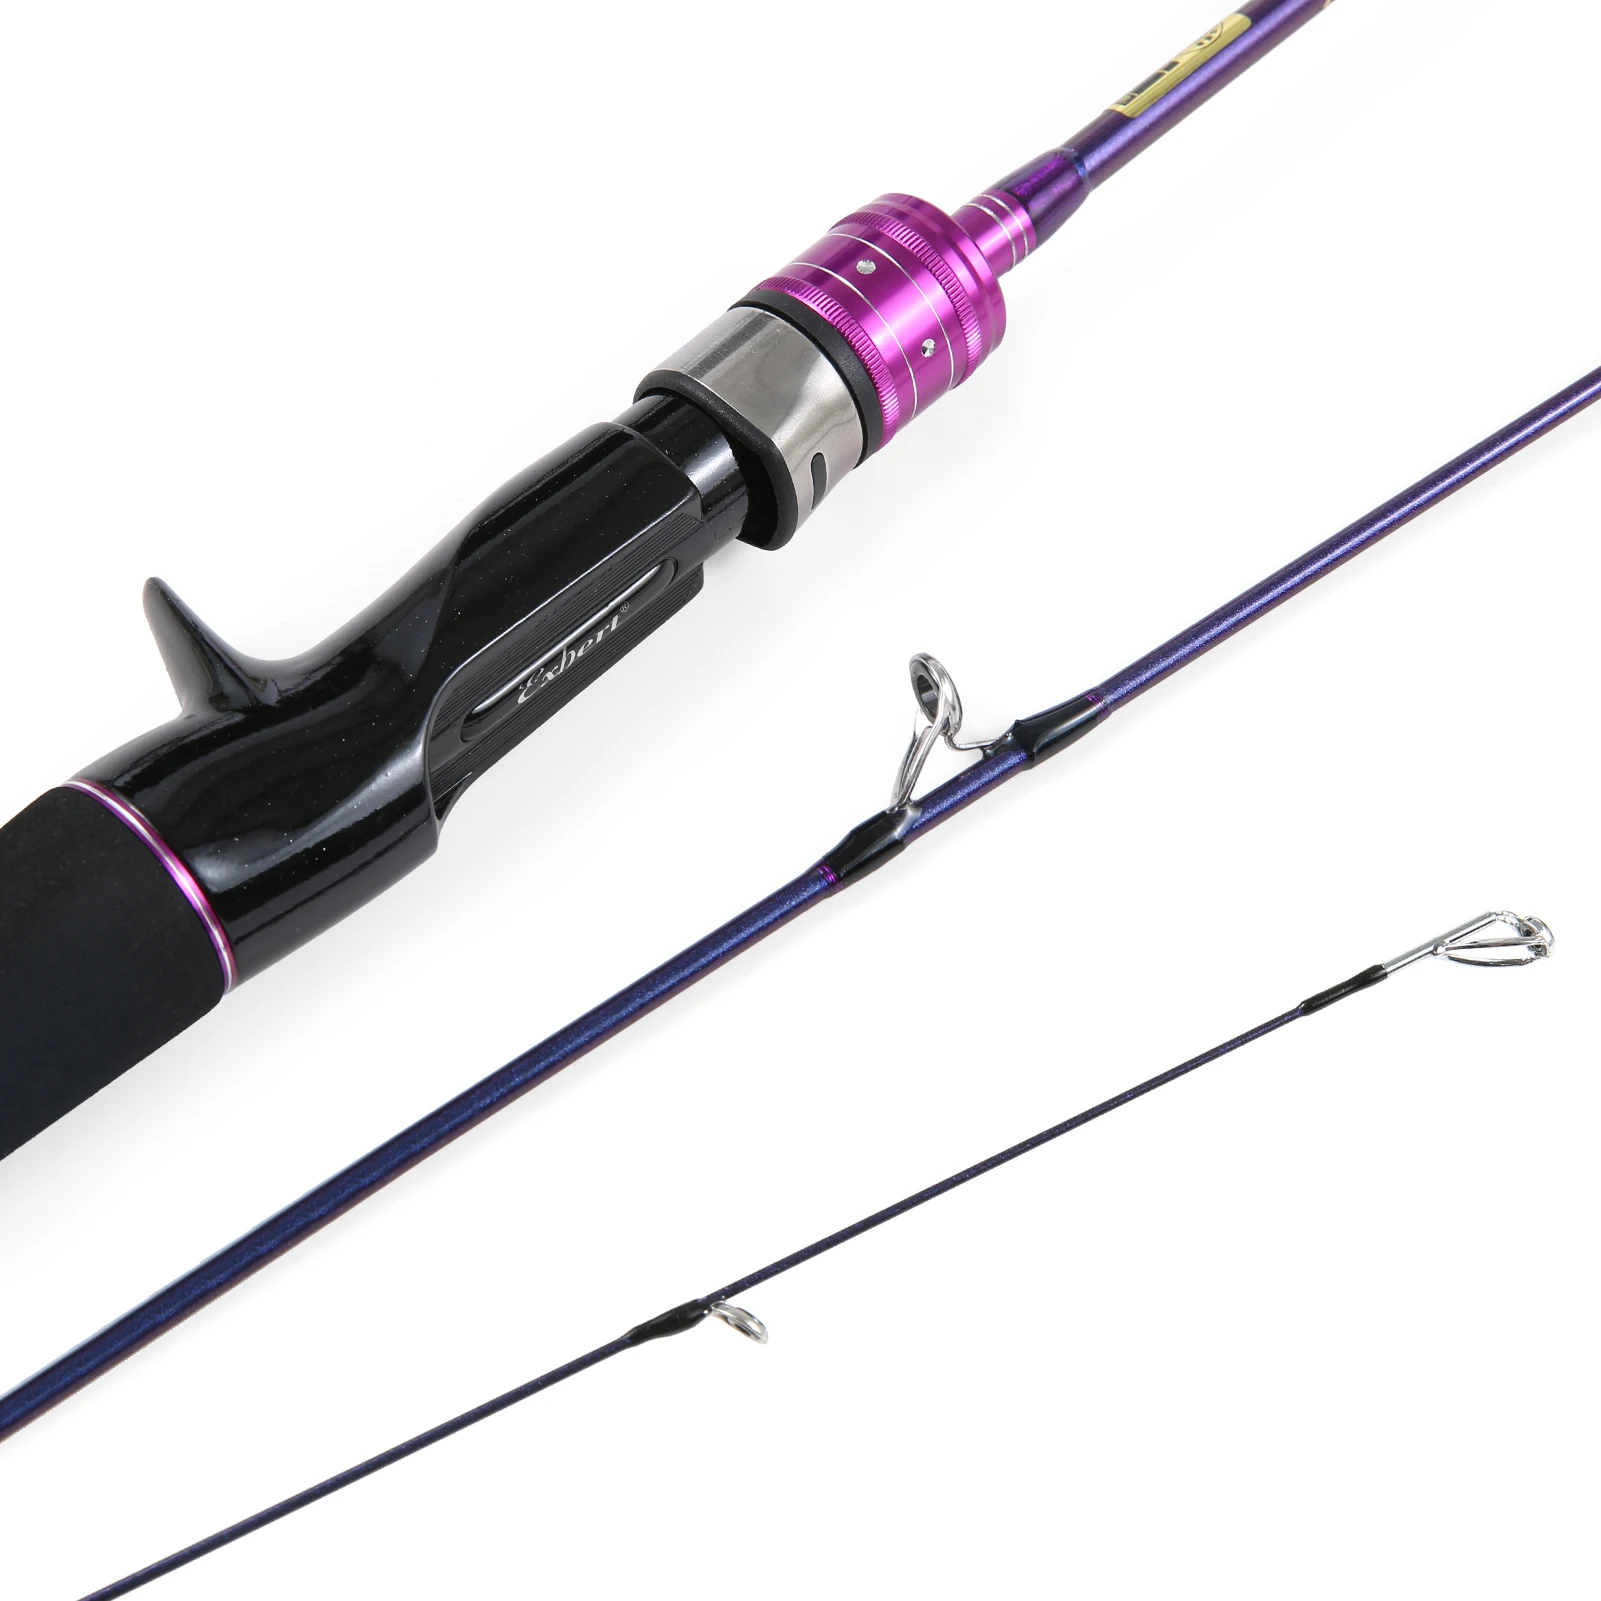 

1.68m / 1.83m Lightweight Carbon Fiber Casting/Spinning Fishing Rod Lure Fishing Rod Fishing Pole carp fishing